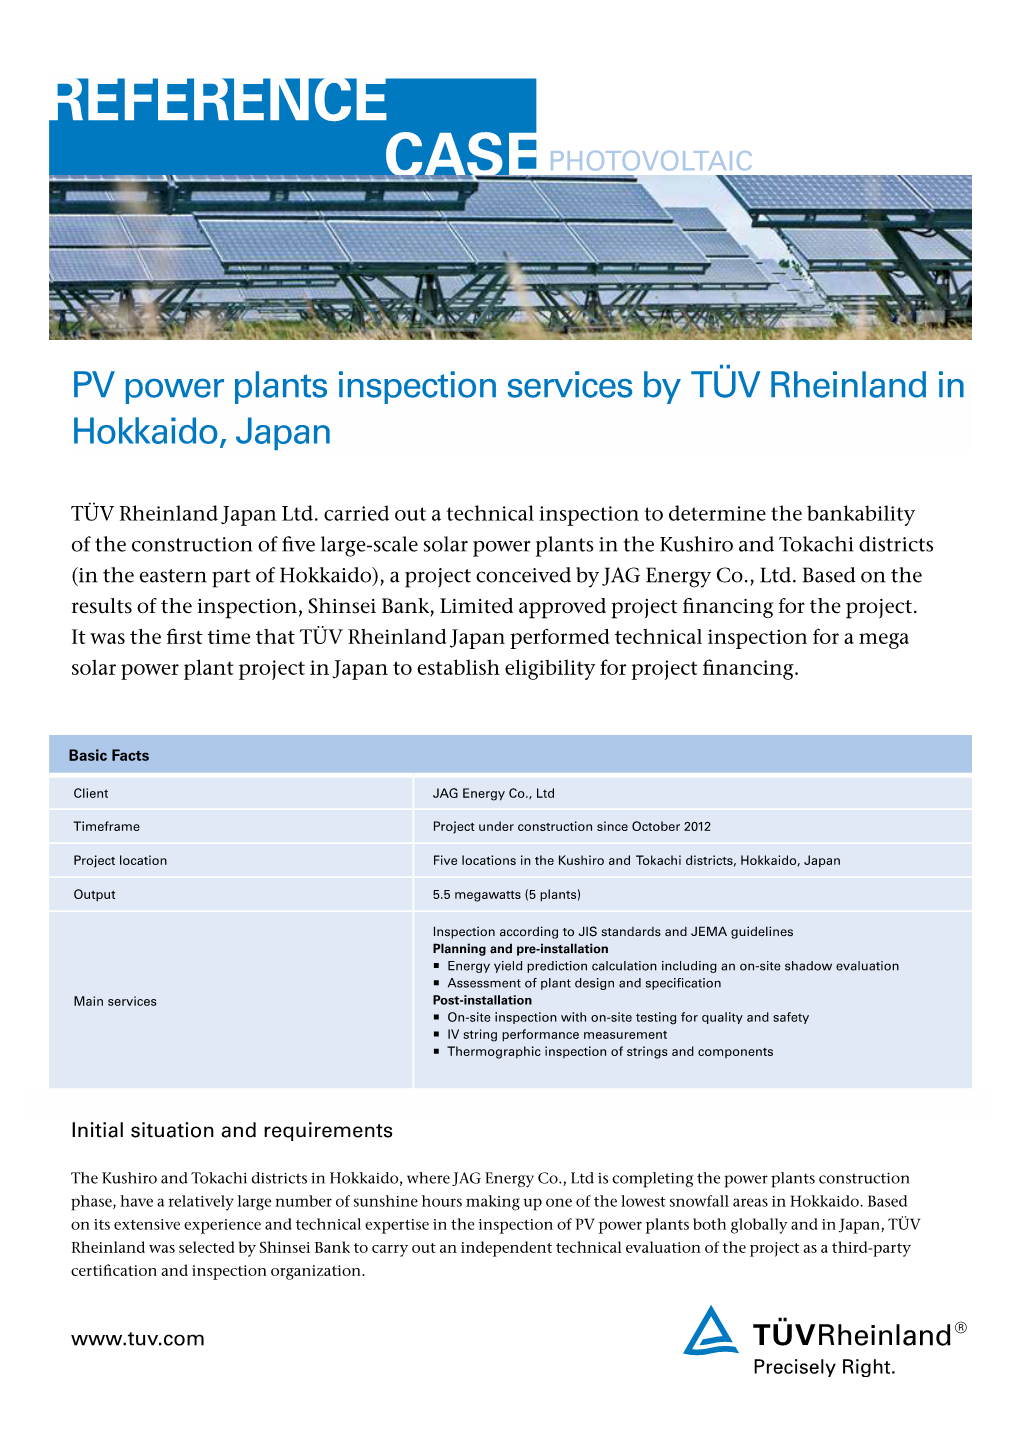 PV Power Plant Inspection in Hokkaido – Japan